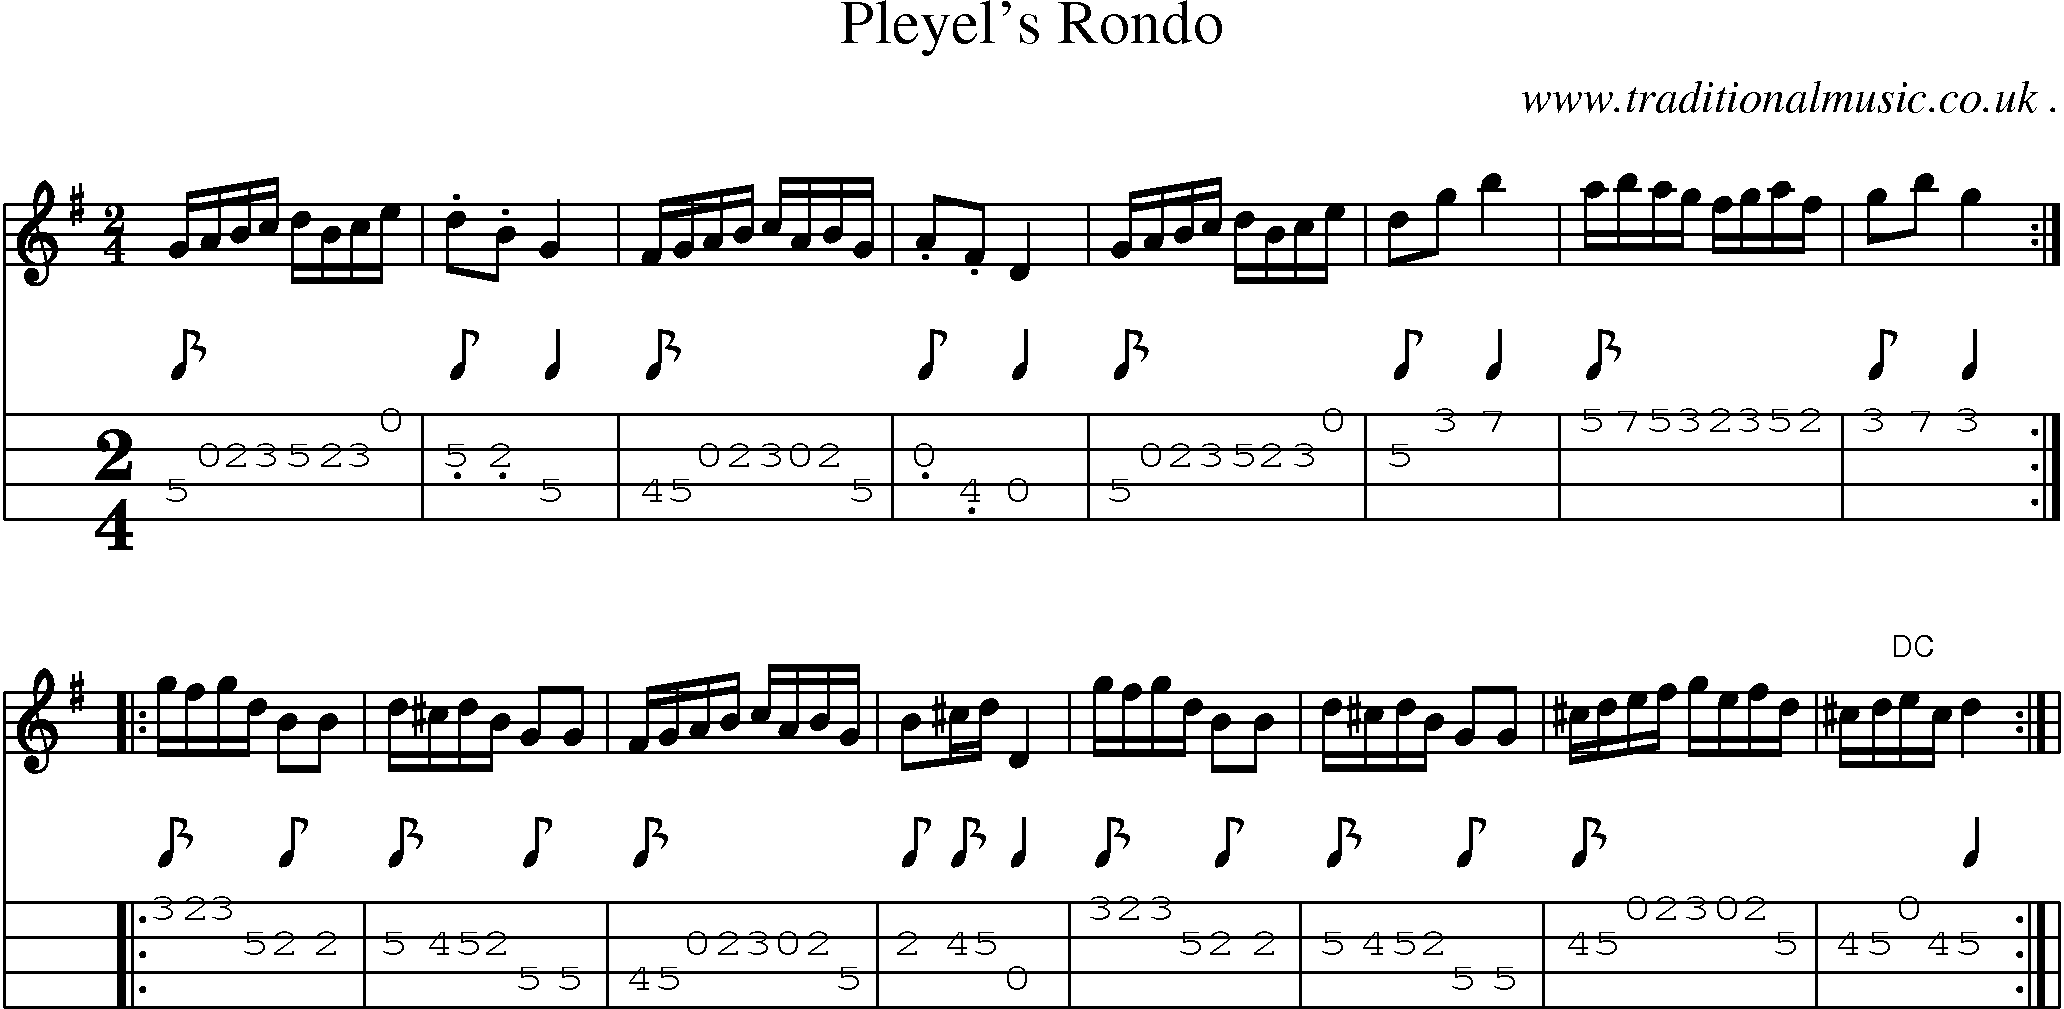 Sheet-Music and Mandolin Tabs for Pleyels Rondo